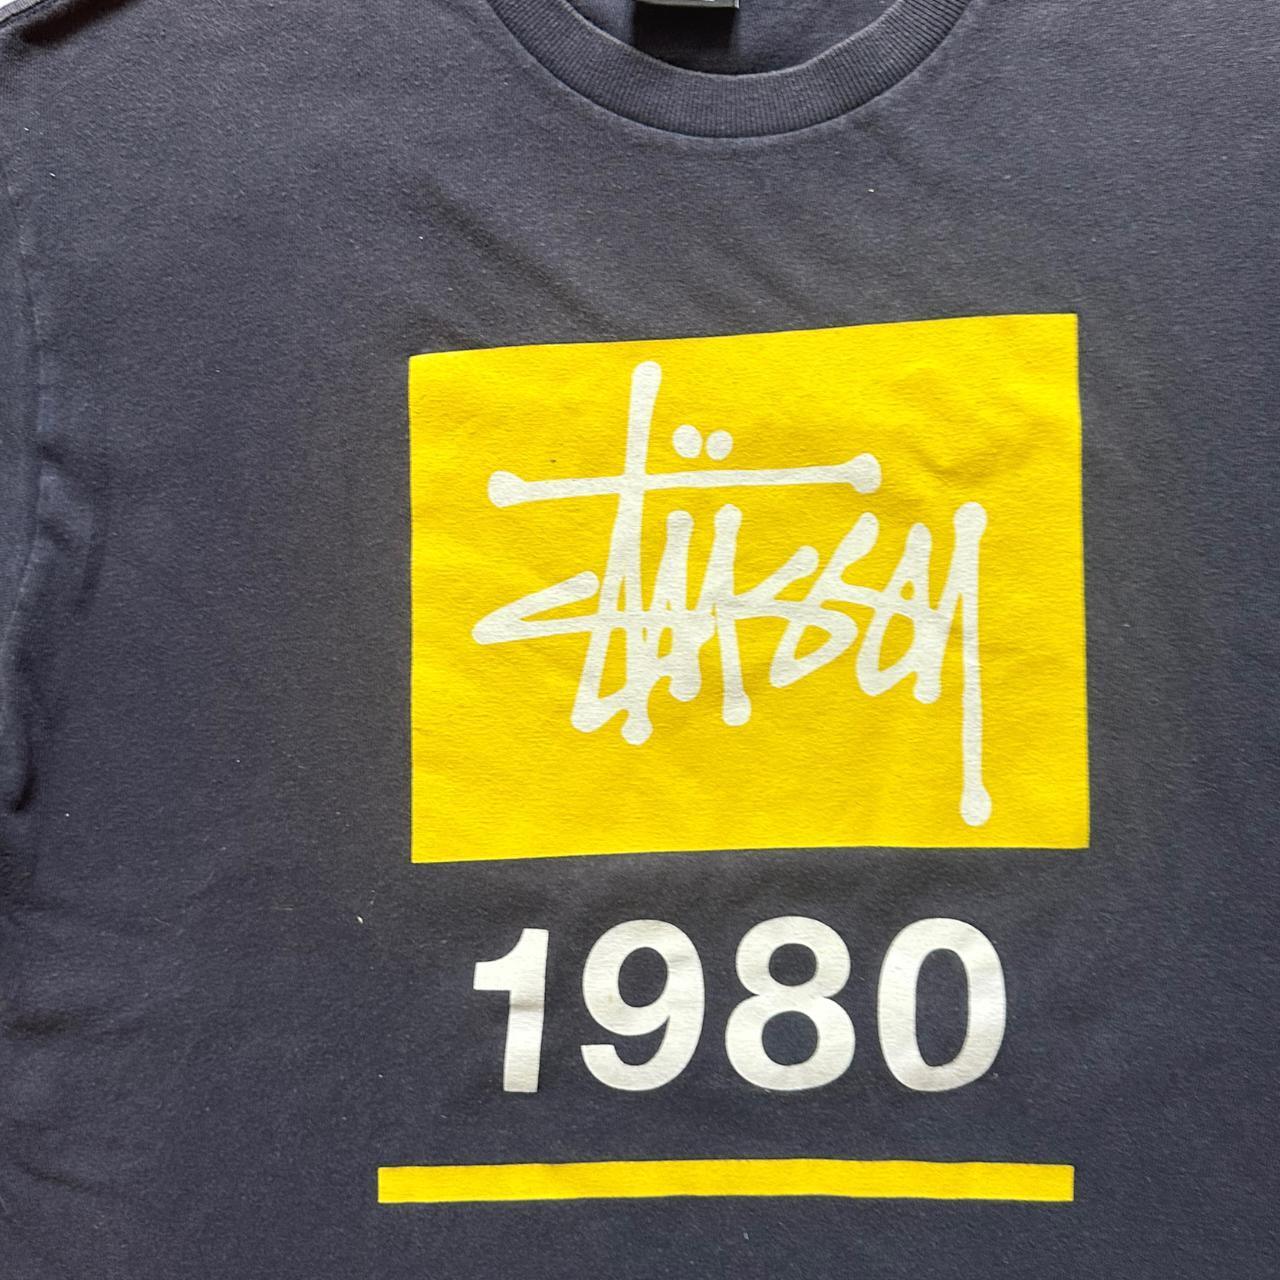 Stussy 1980 logo T-shirt - Known Source